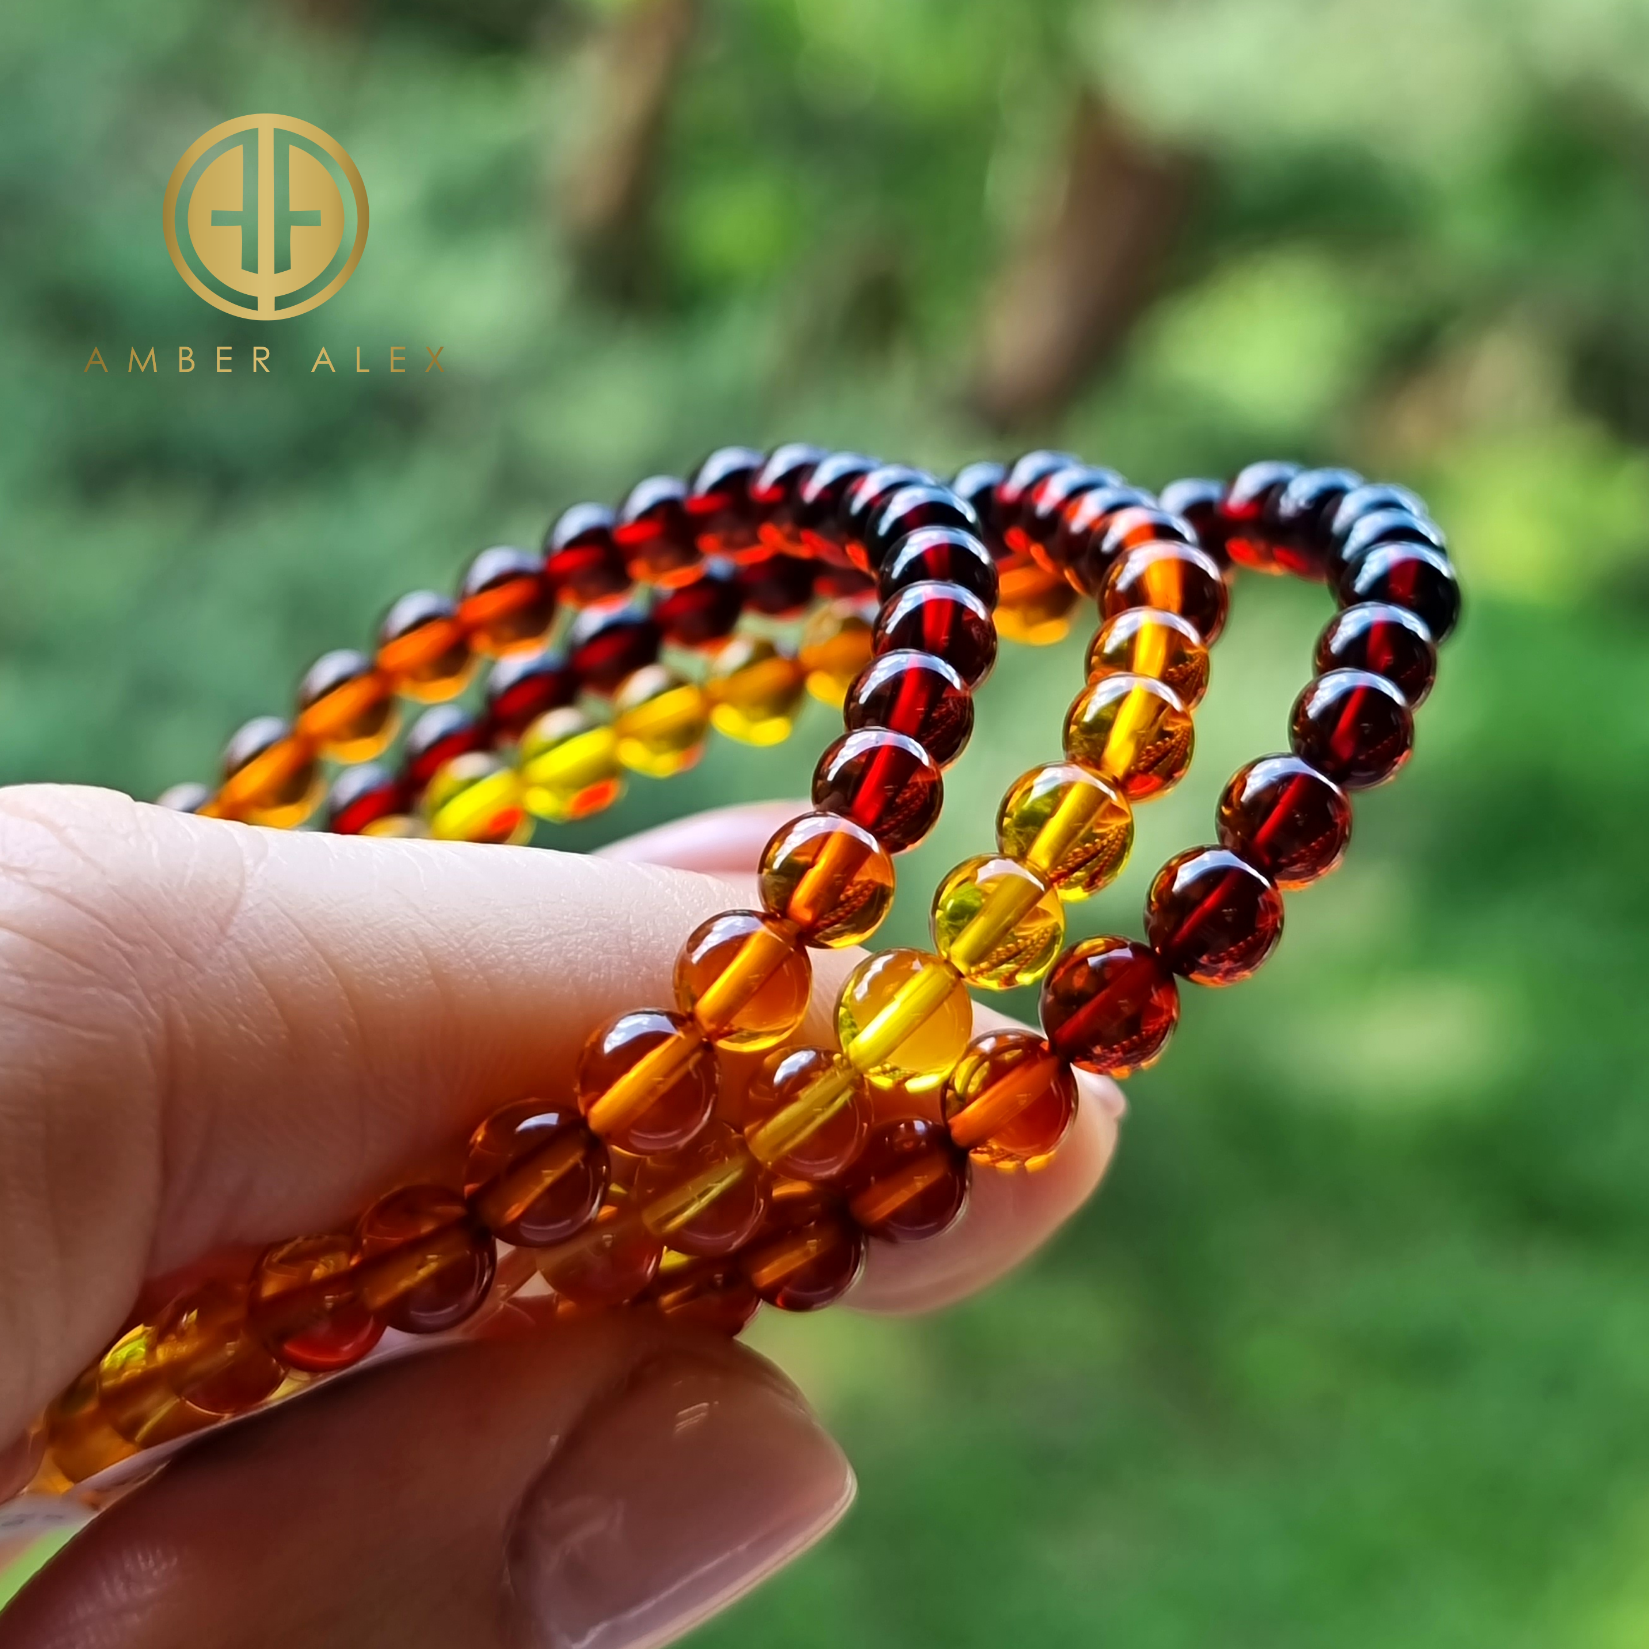 Rainbow Amber Round Beads Stretch Bracelet